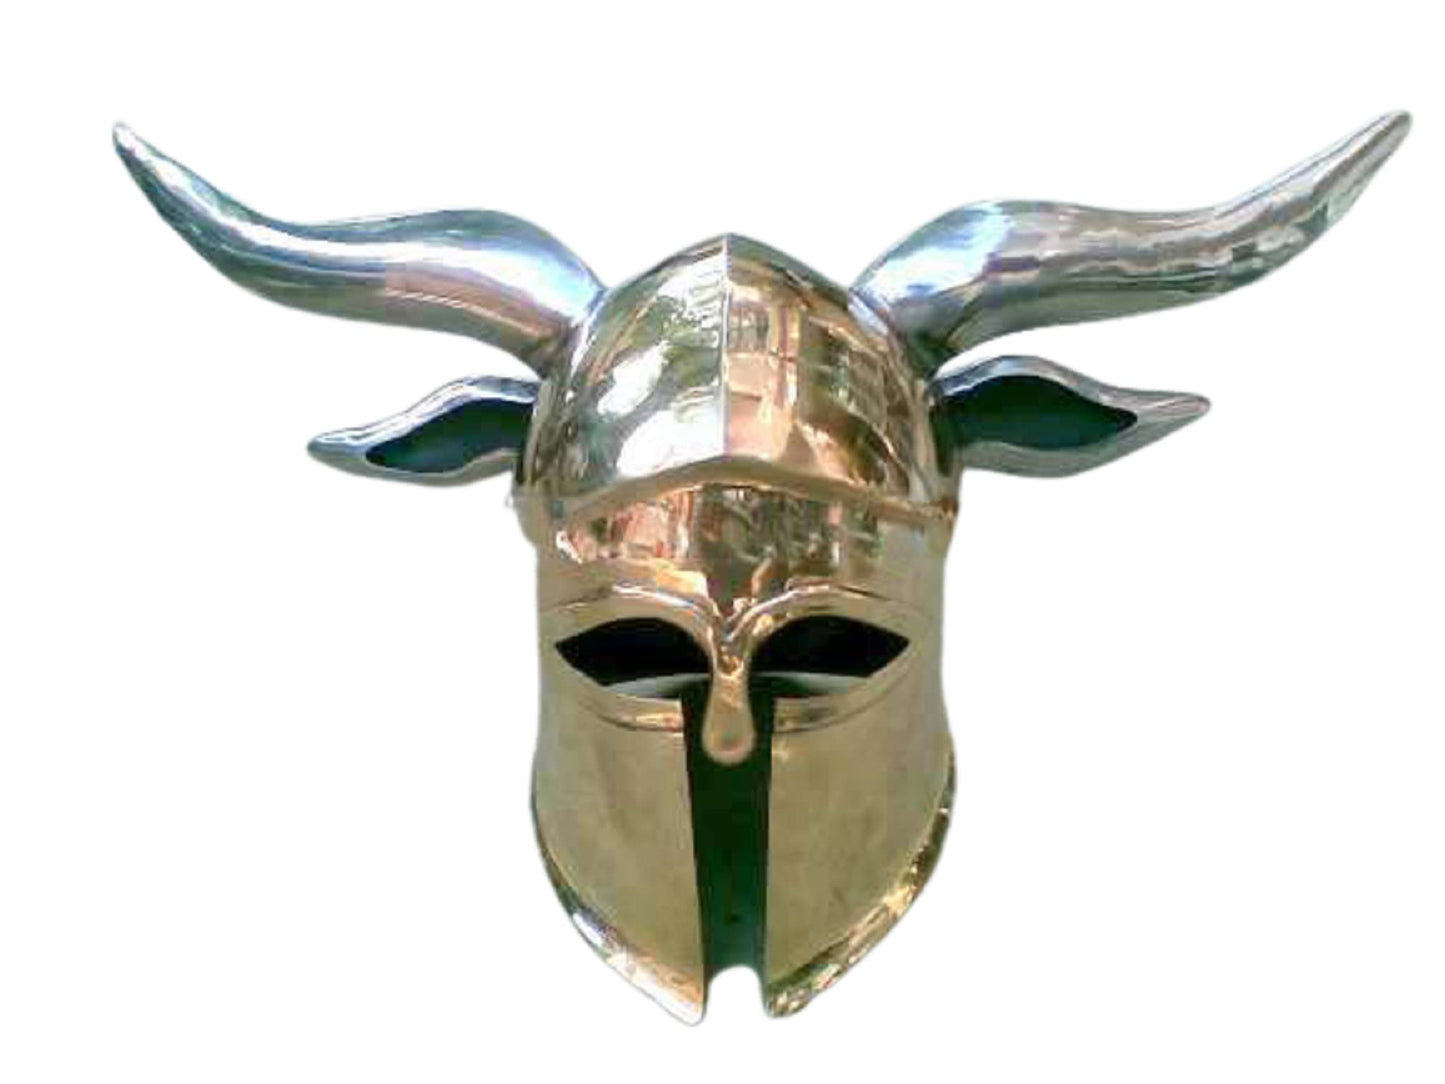 Products Steel Viking Warrior Horn Helmet